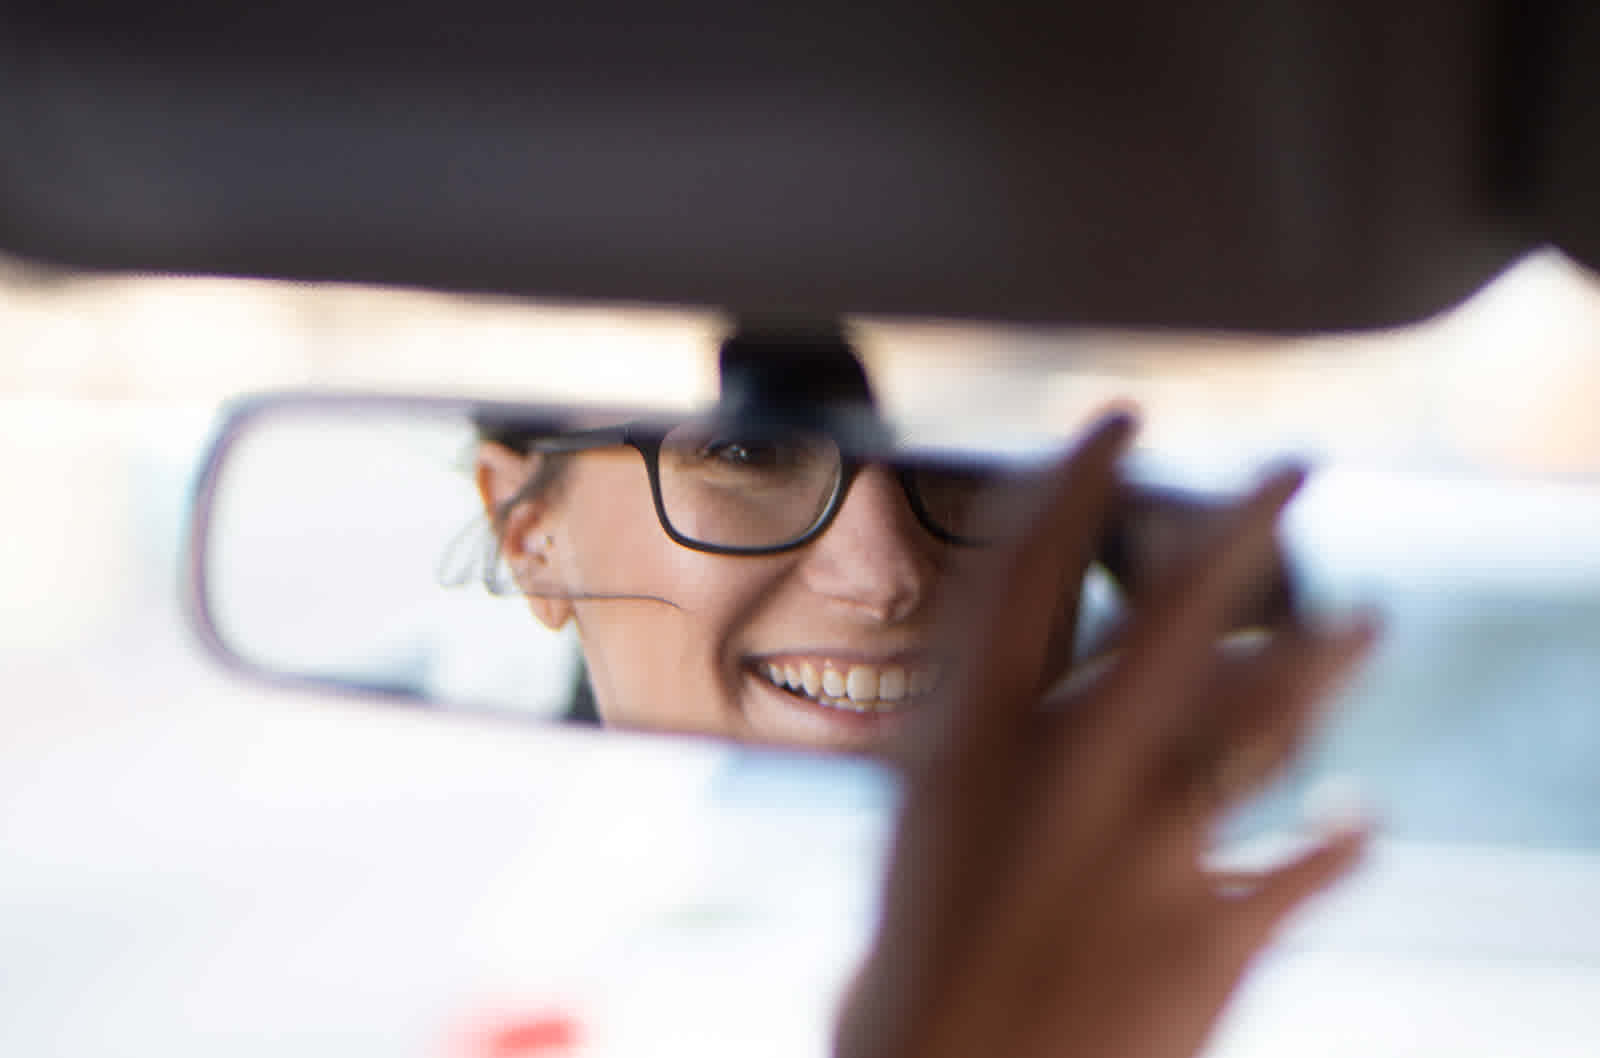 Woman smiles into rearview mirror